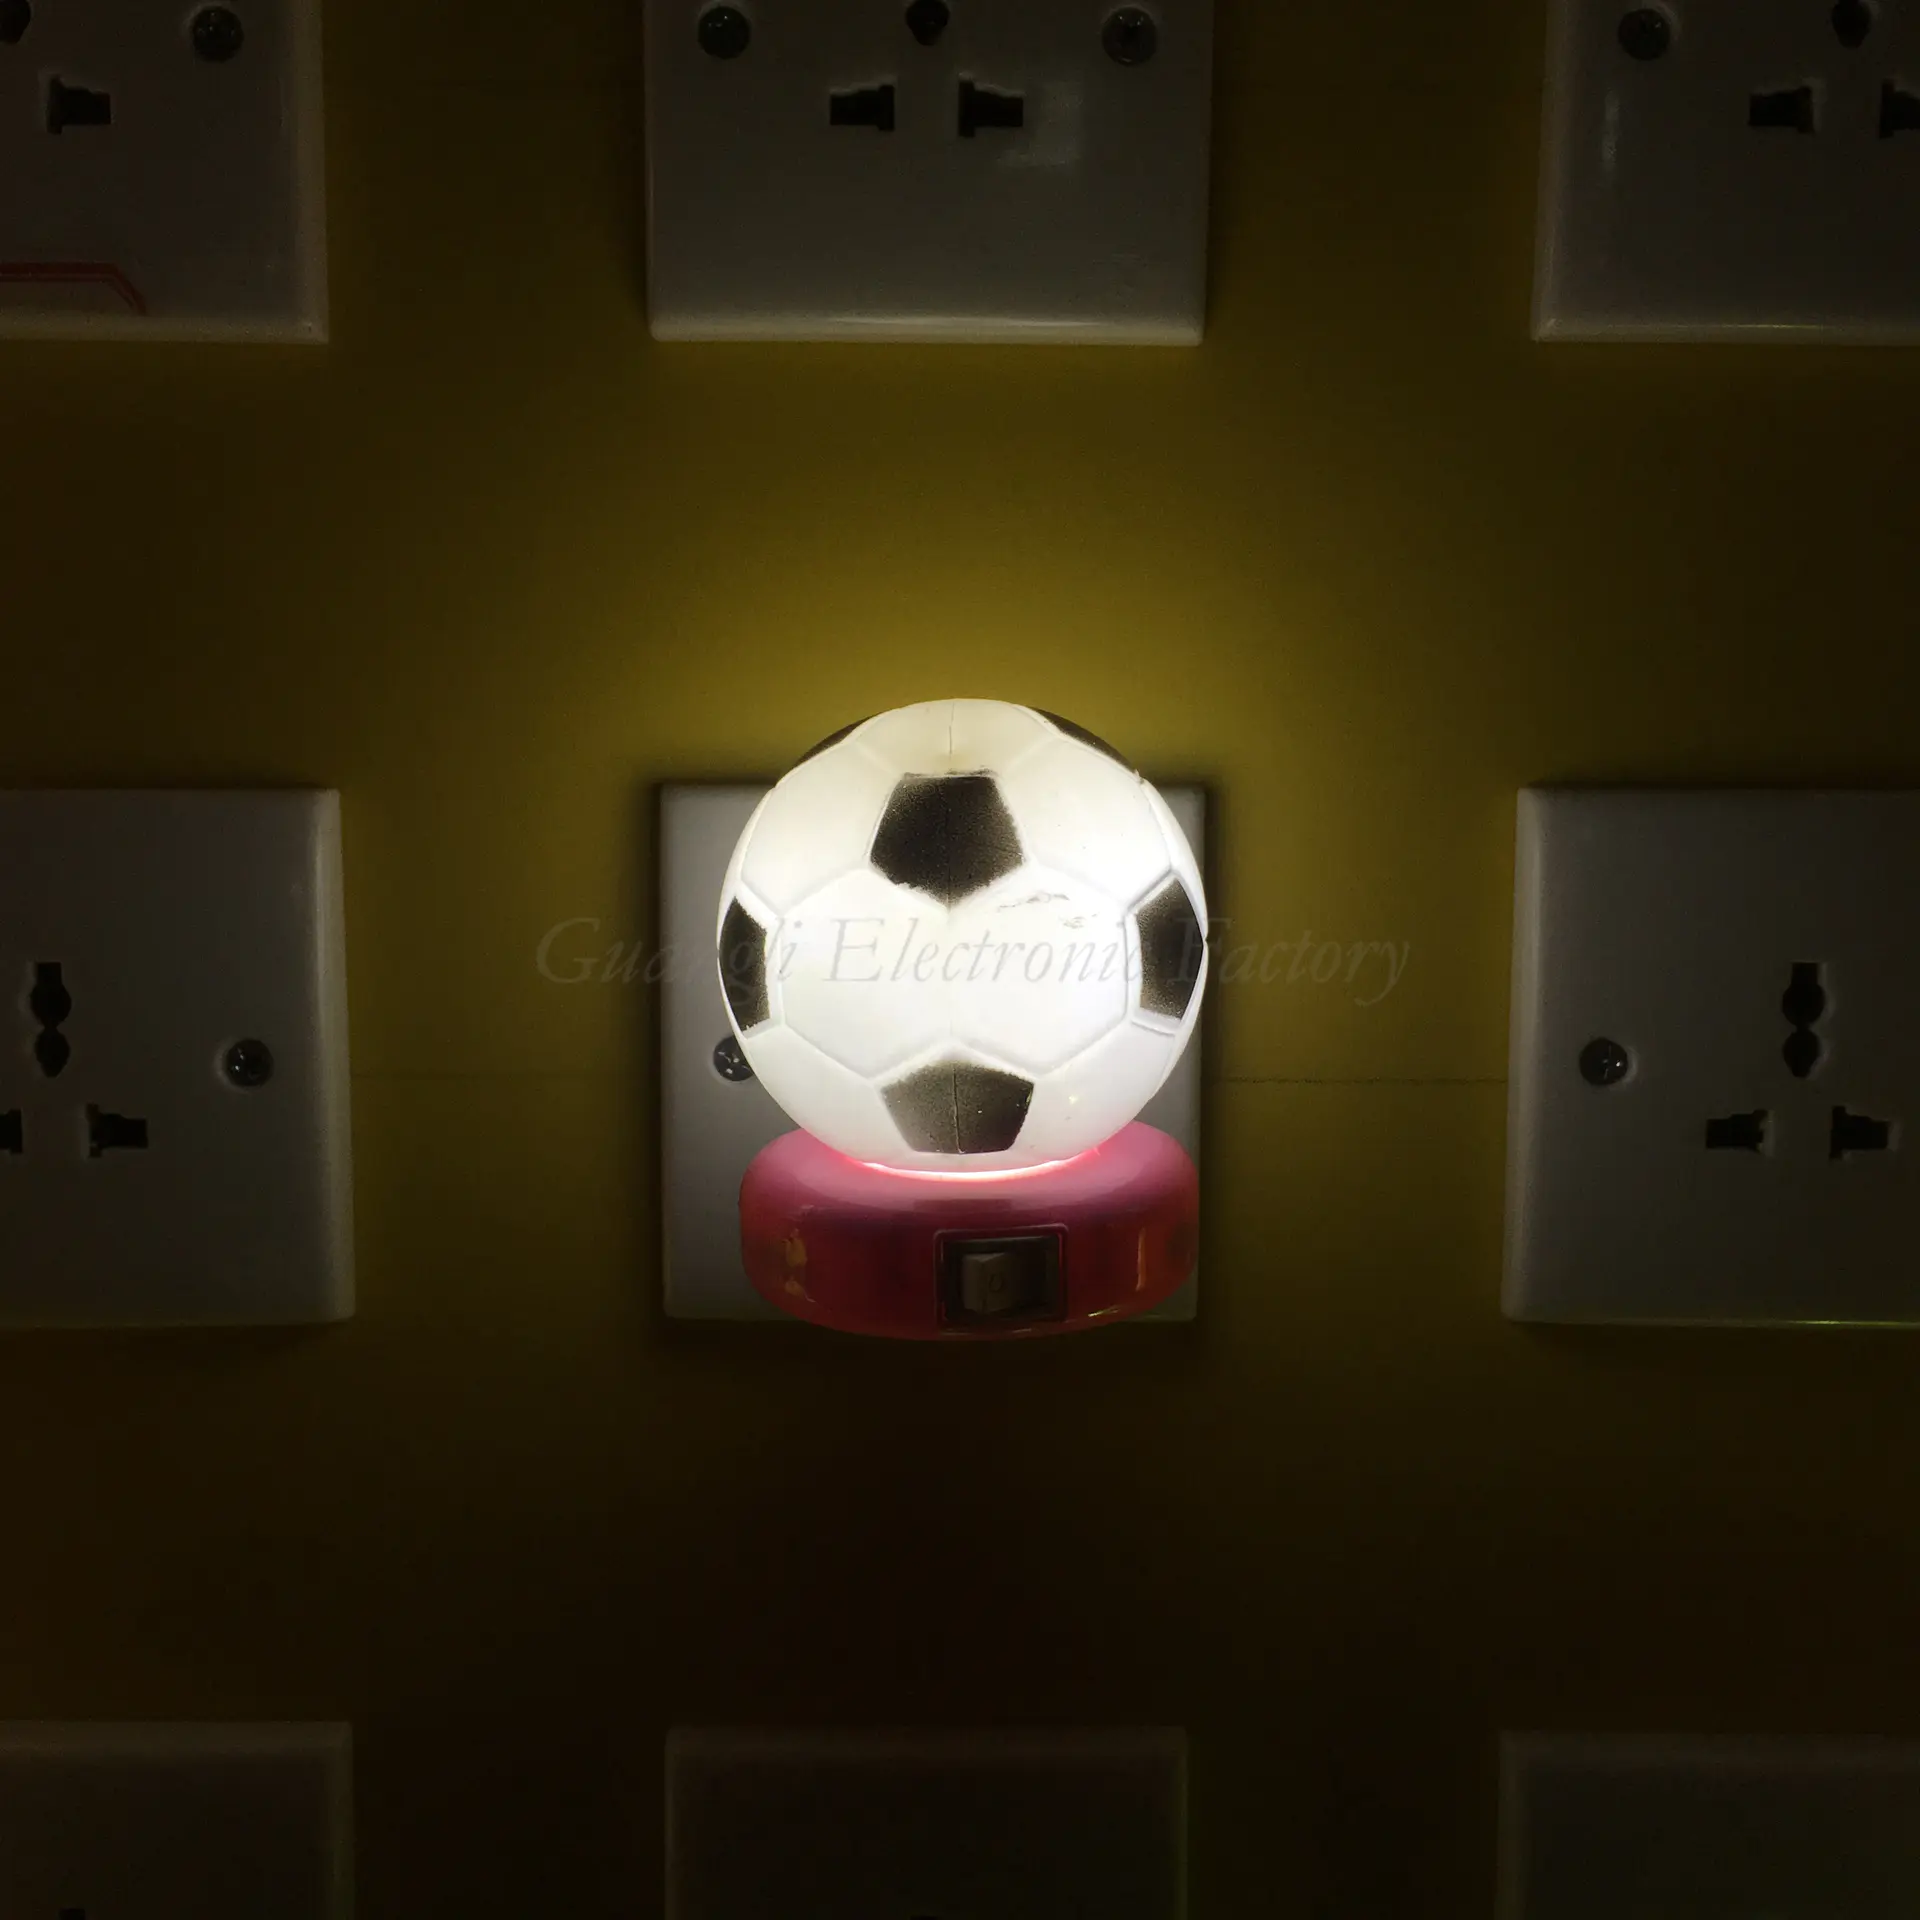 W071 World Cup Souvenir gifts Soccer Football 5SMD mini switch plug in LED night light 0.6W AC 110V 220V